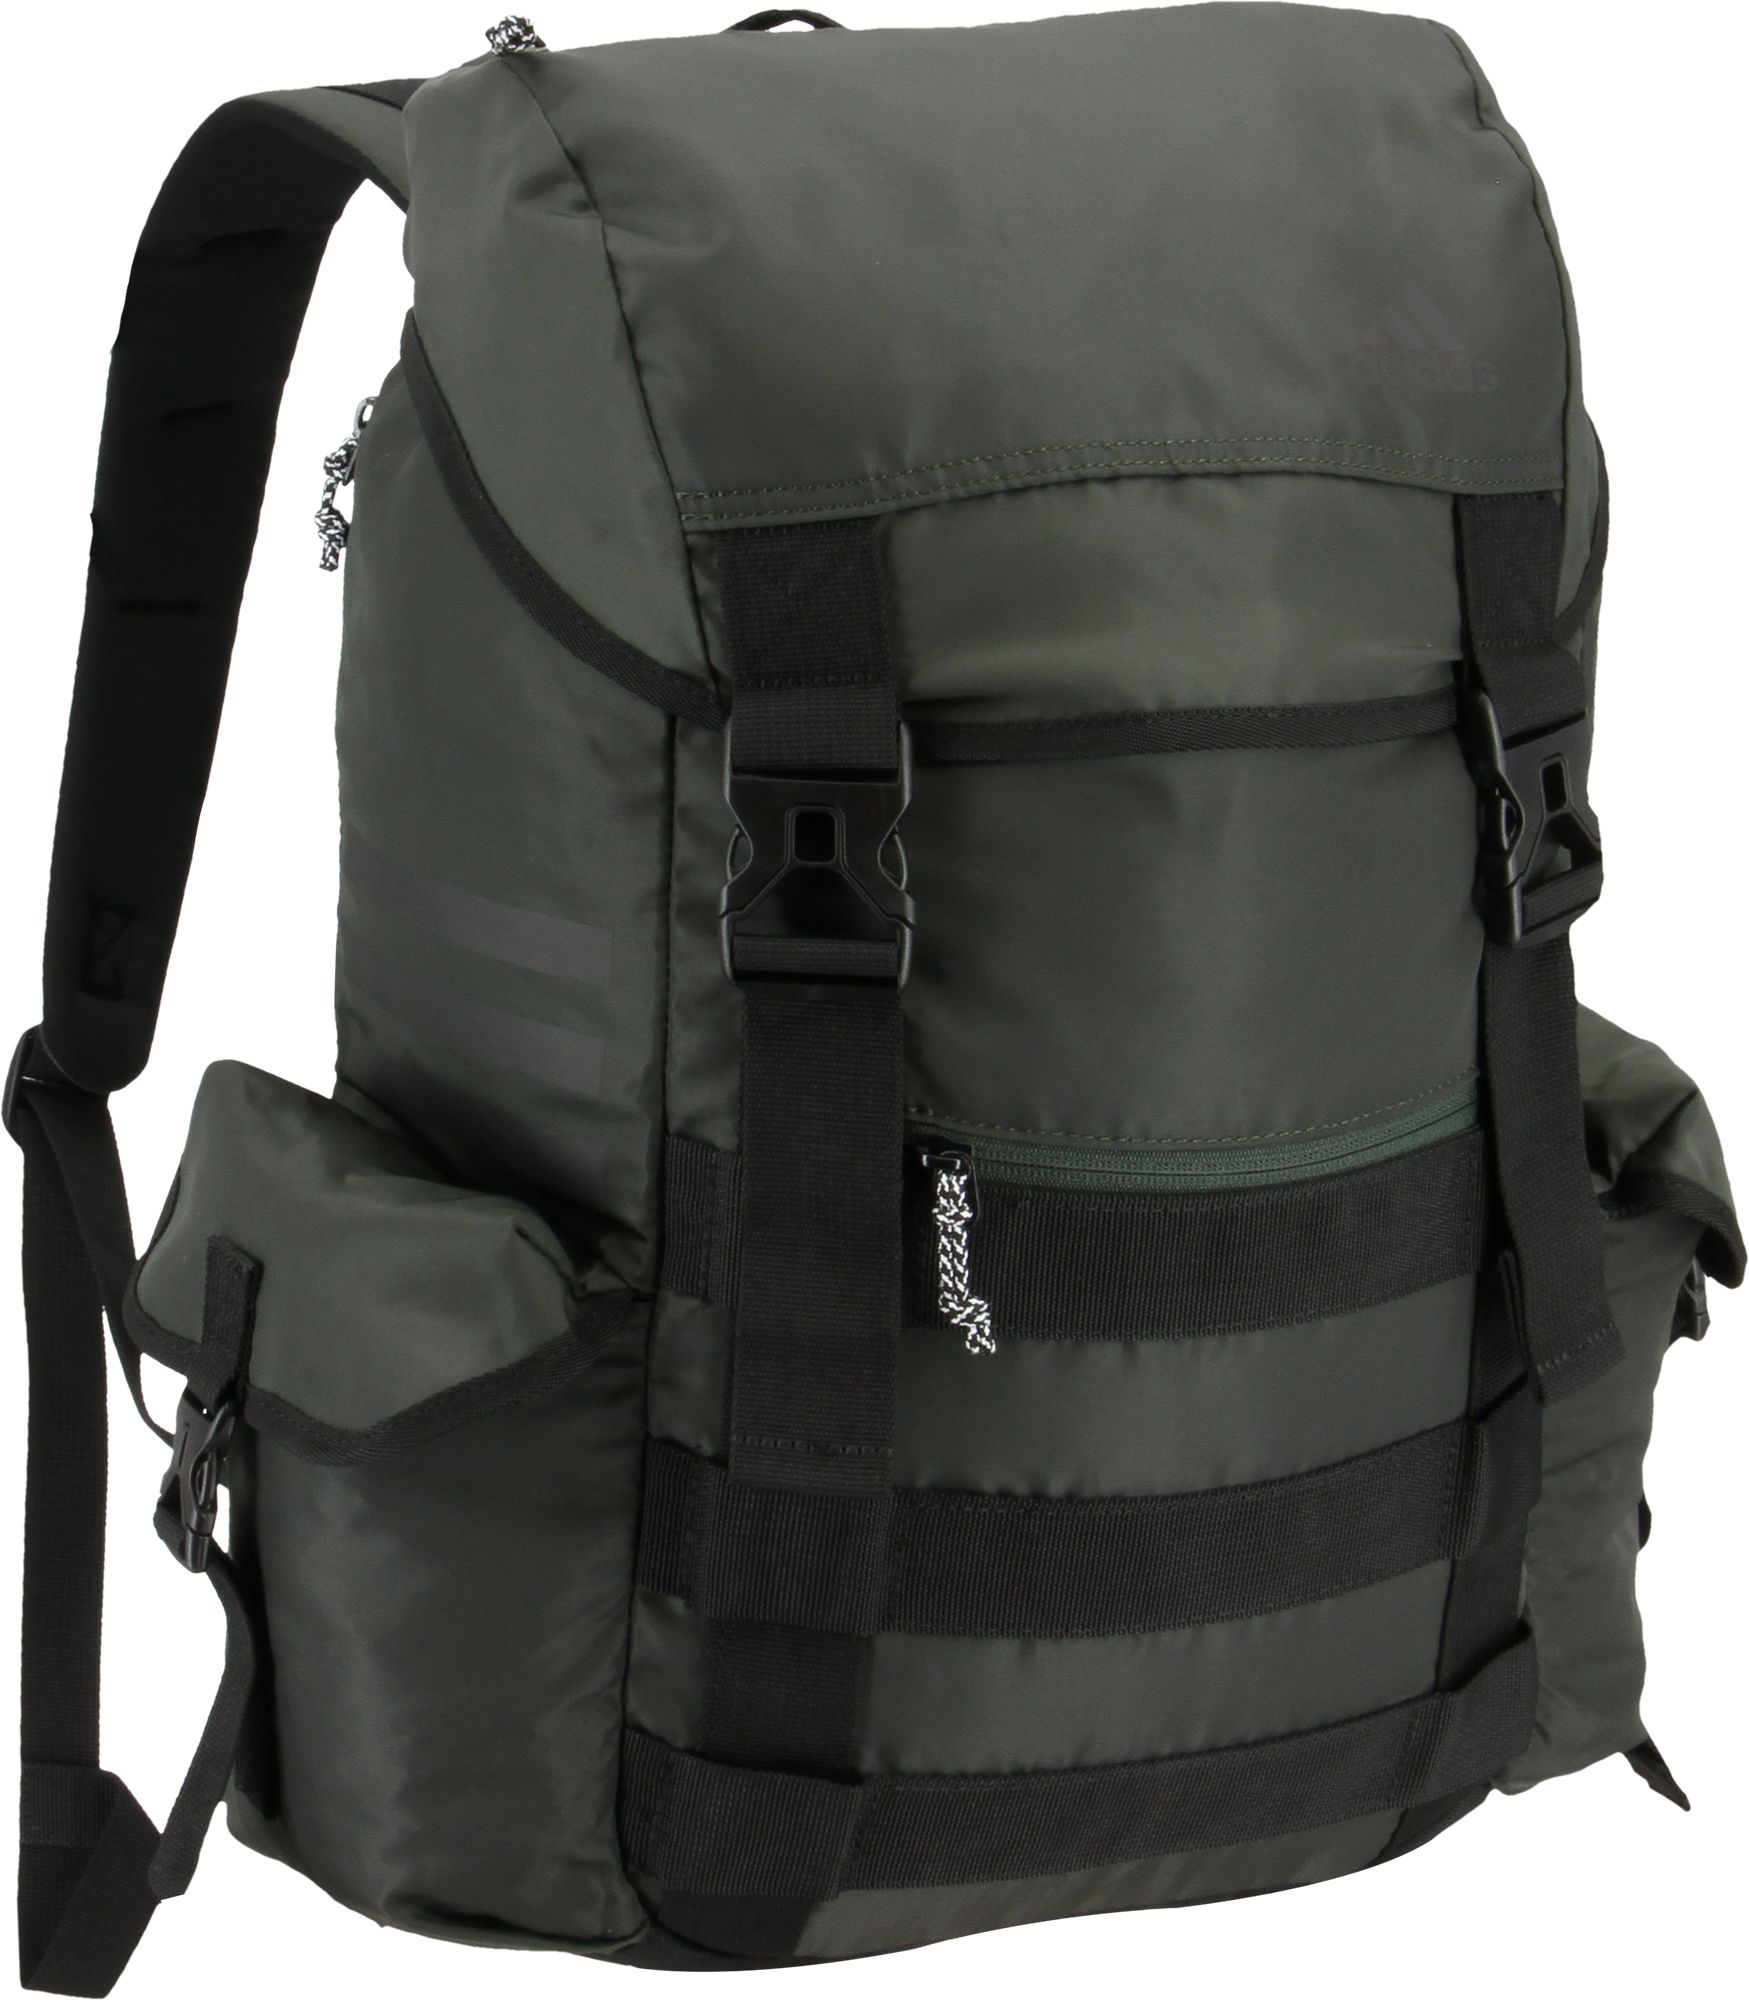 adidas utility backpack